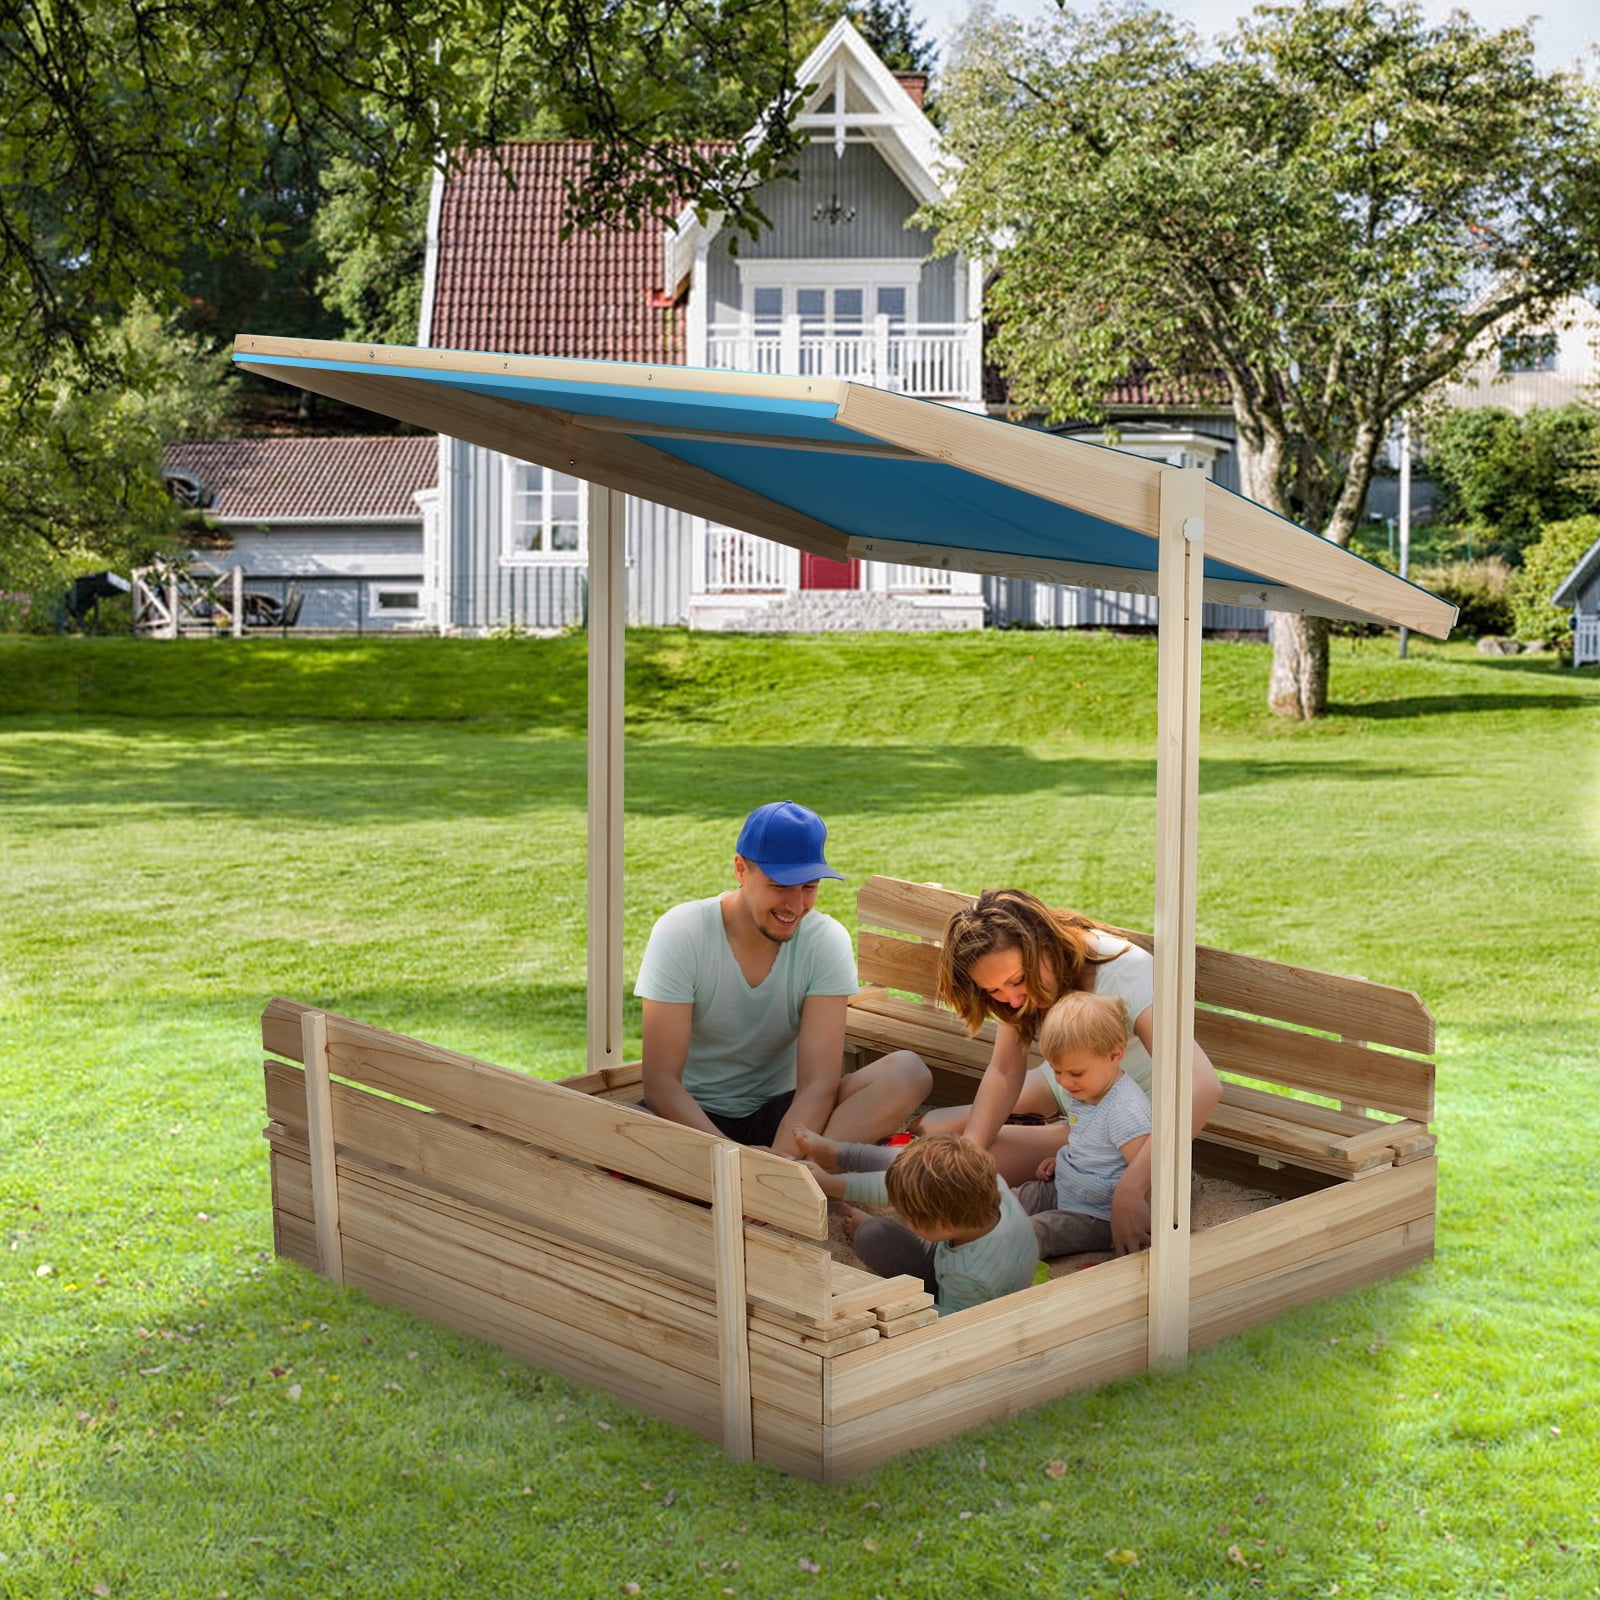 Outside Sandbox Toy Cover Canopy Wooden Bench Kids Sandpit Backyard Playhouse 